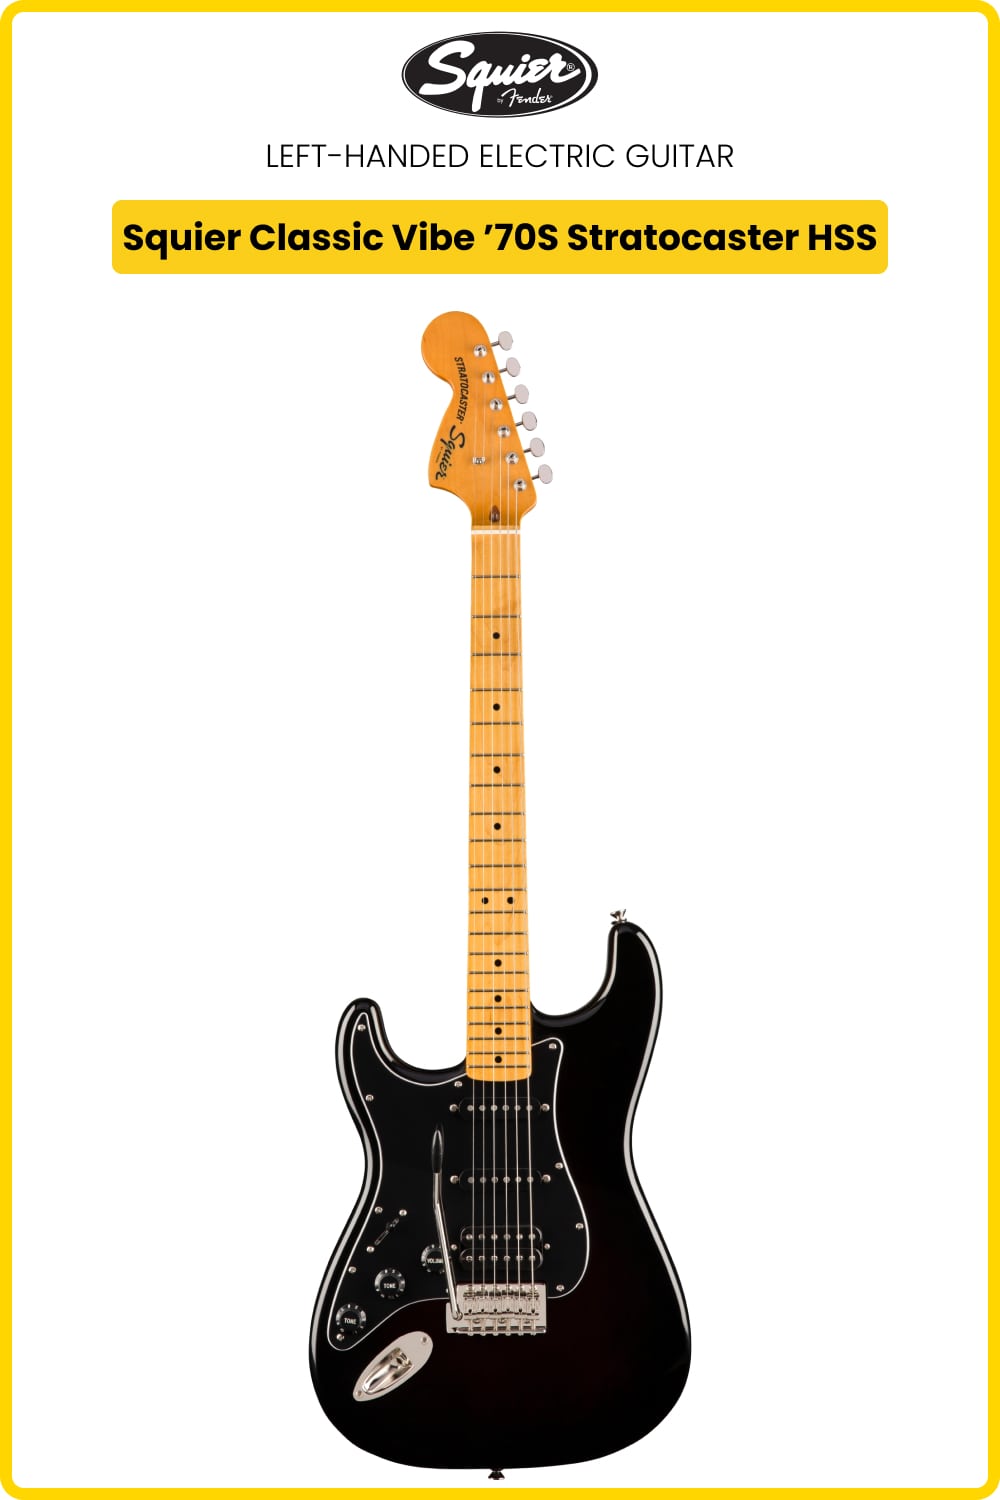 Left-Handed Squier CV 70S Stratocaster HSS